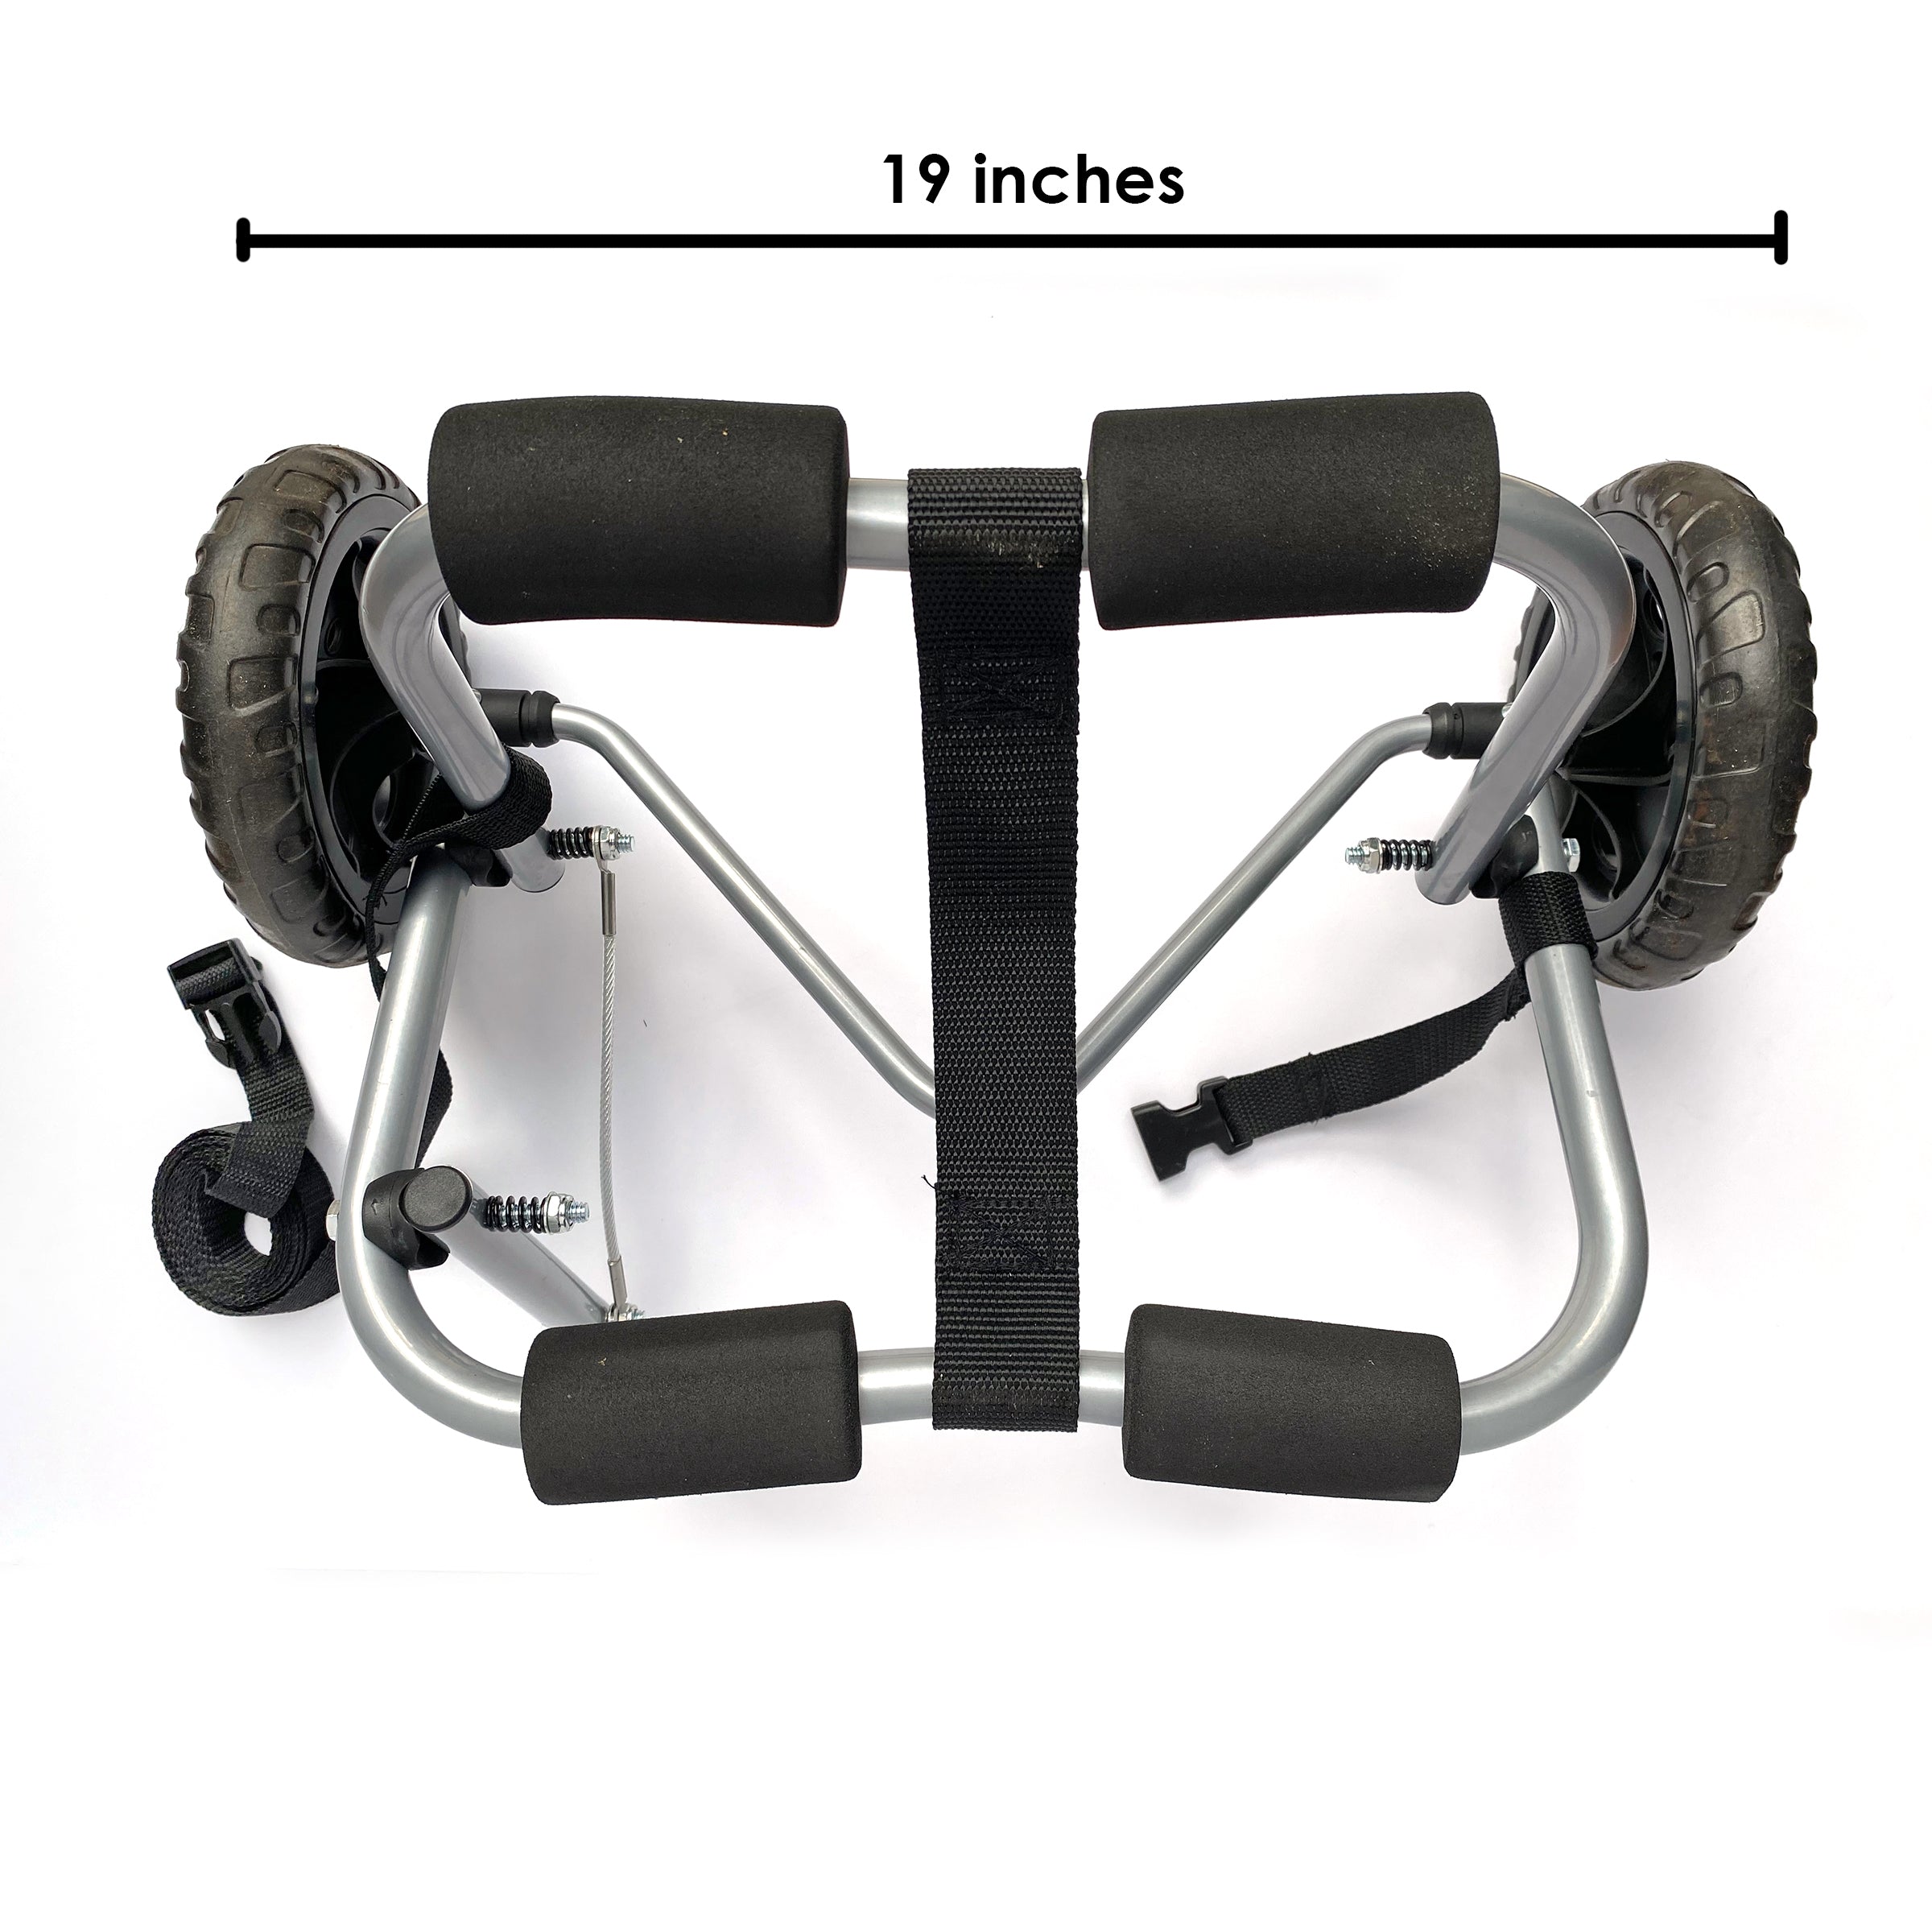 Mini kayak wheel kit measurements